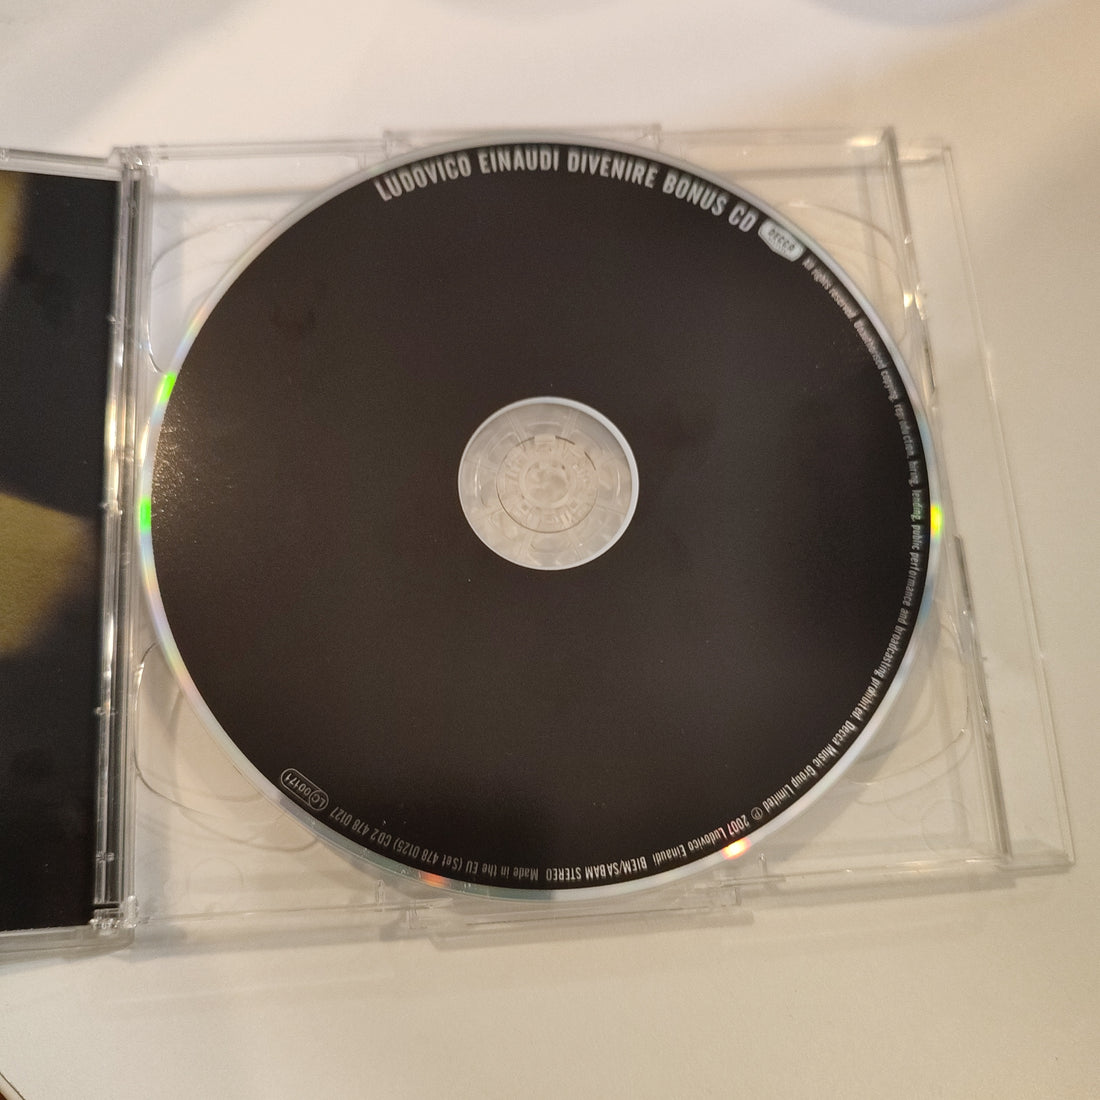 Ludovico Einaudi - Divenire (CD) (VG+)